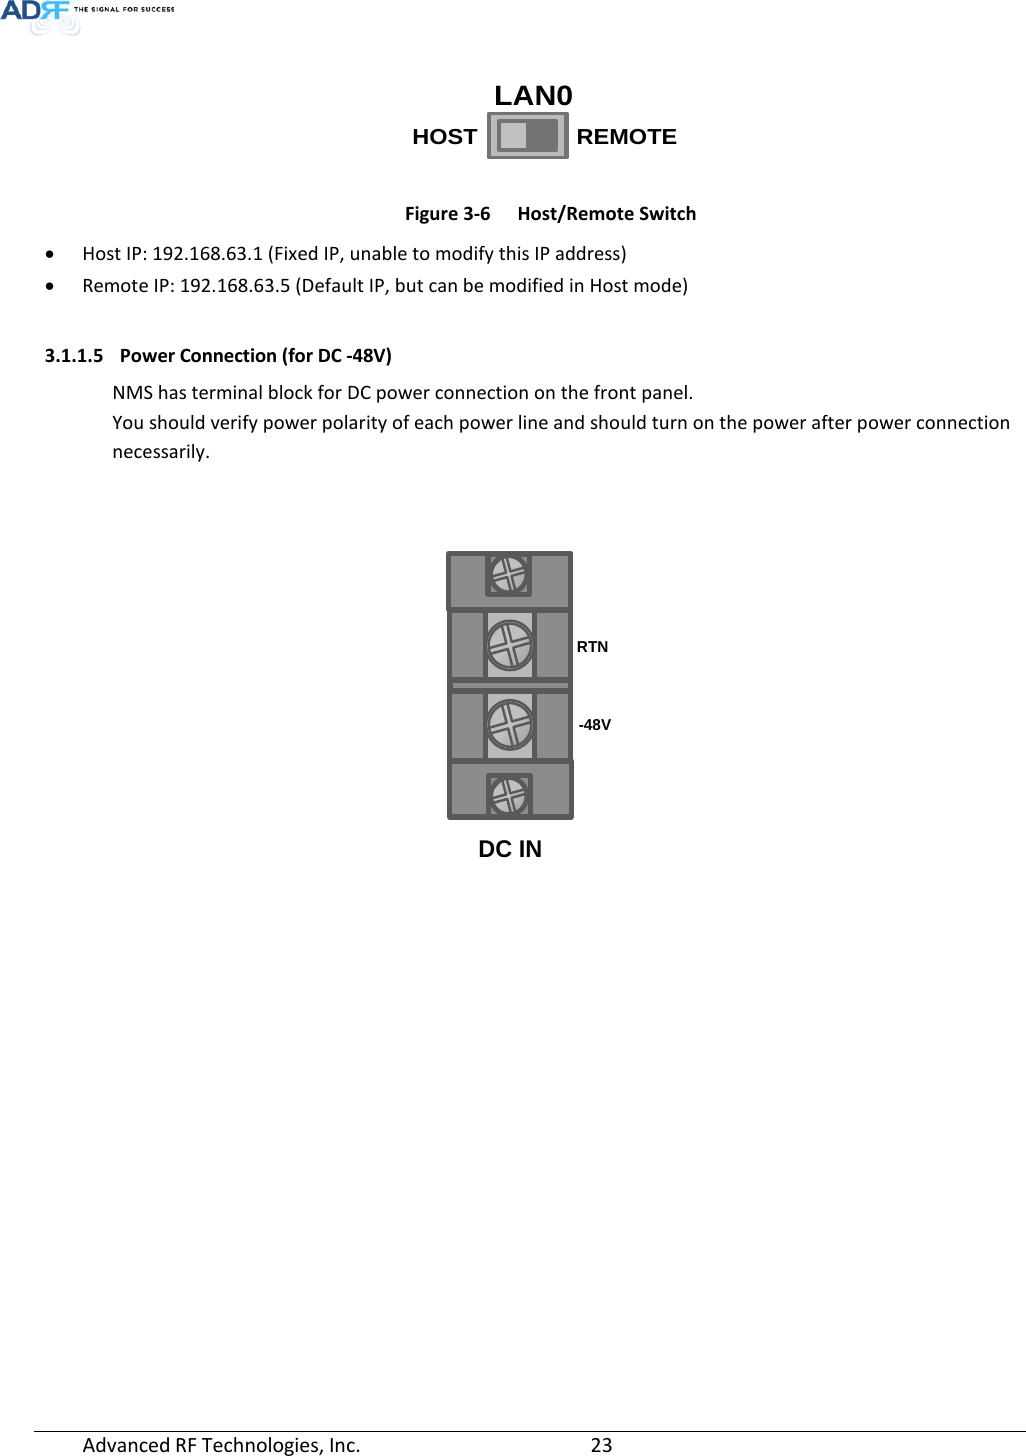 Page 23 of ADRF KOREA ADXV DAS(Distributed Antenna System) User Manual ADXV DAS